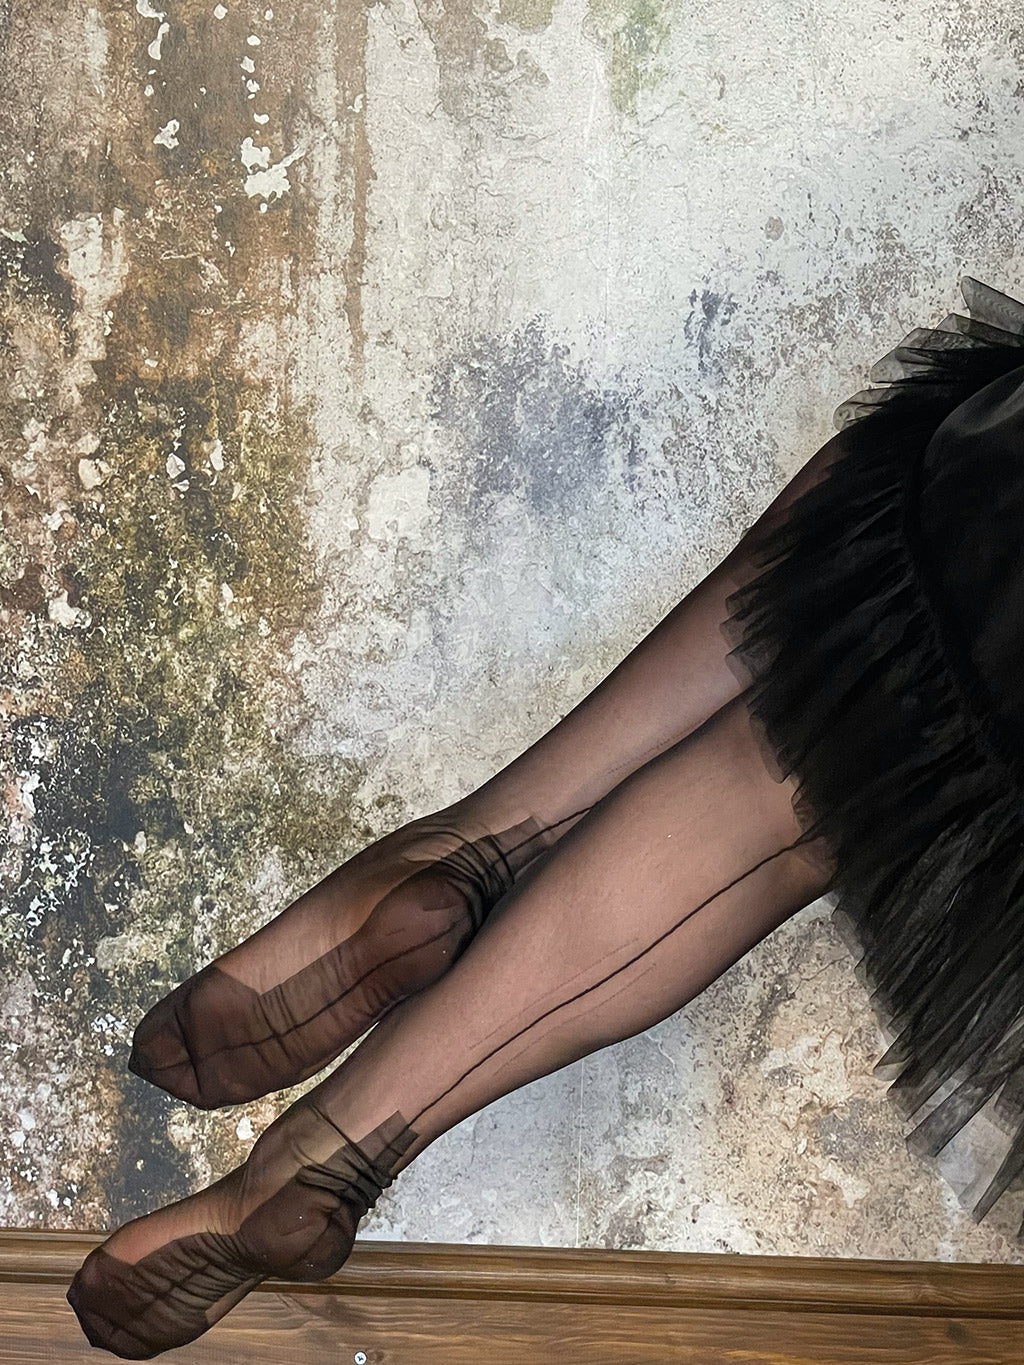 Vintage Aristoc Landsdowne Fully Fashioned Stockings close up